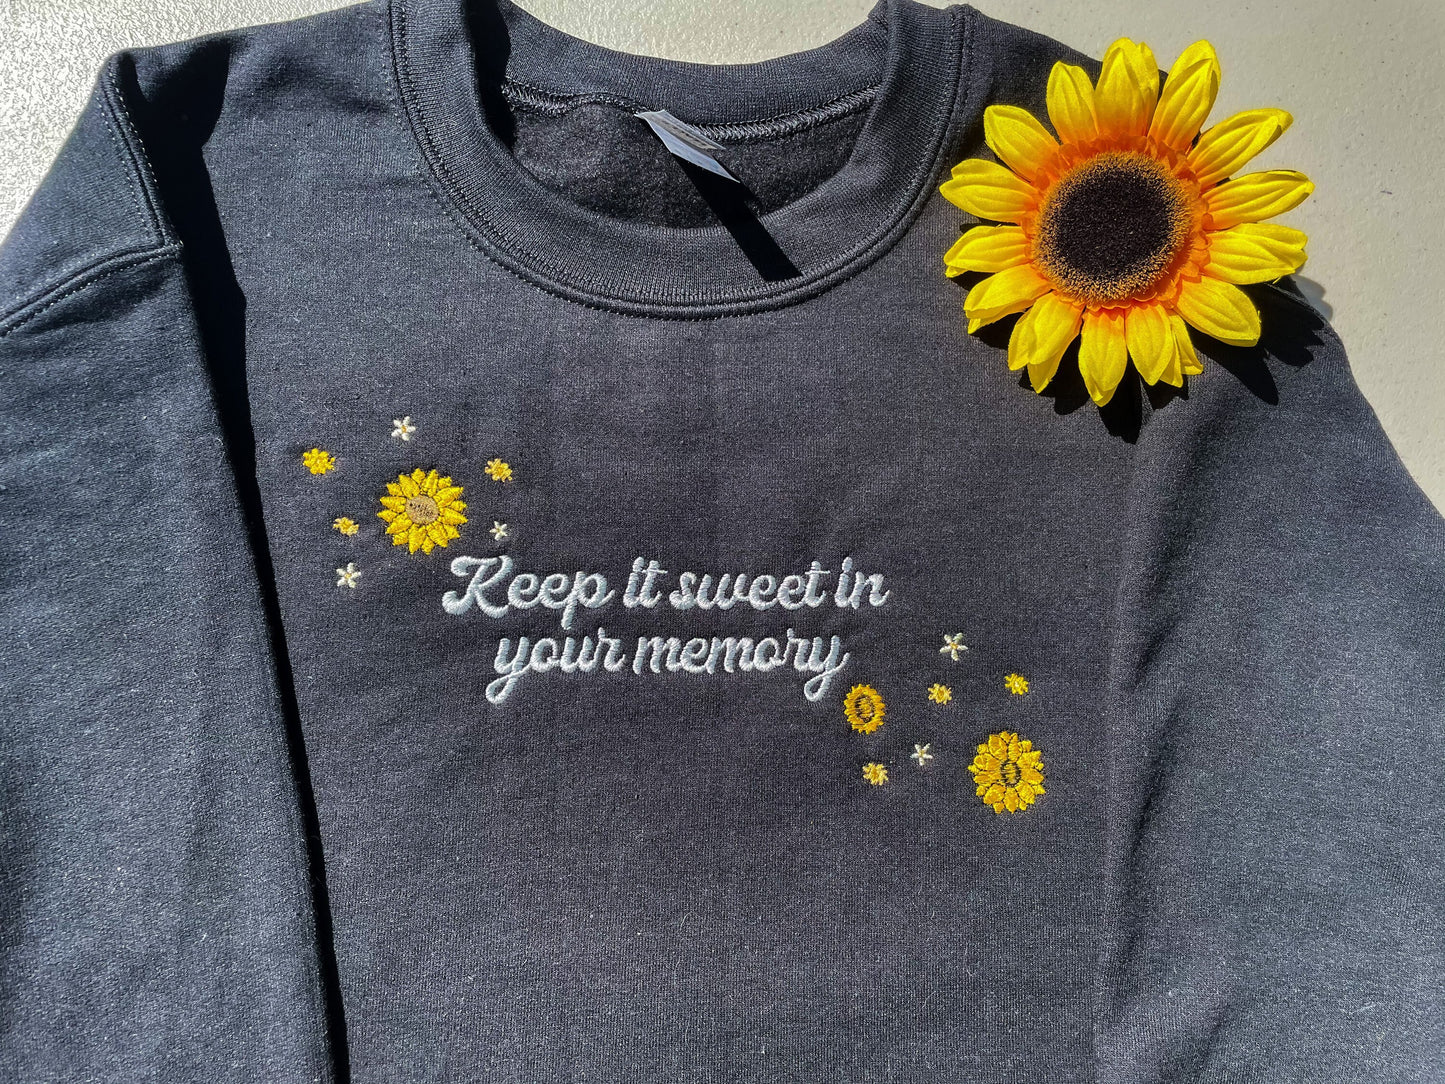 Keep it Sweet - Sunflower vol 6 || Embroidered Crewneck, Sweatshirt, and Tee Shirt